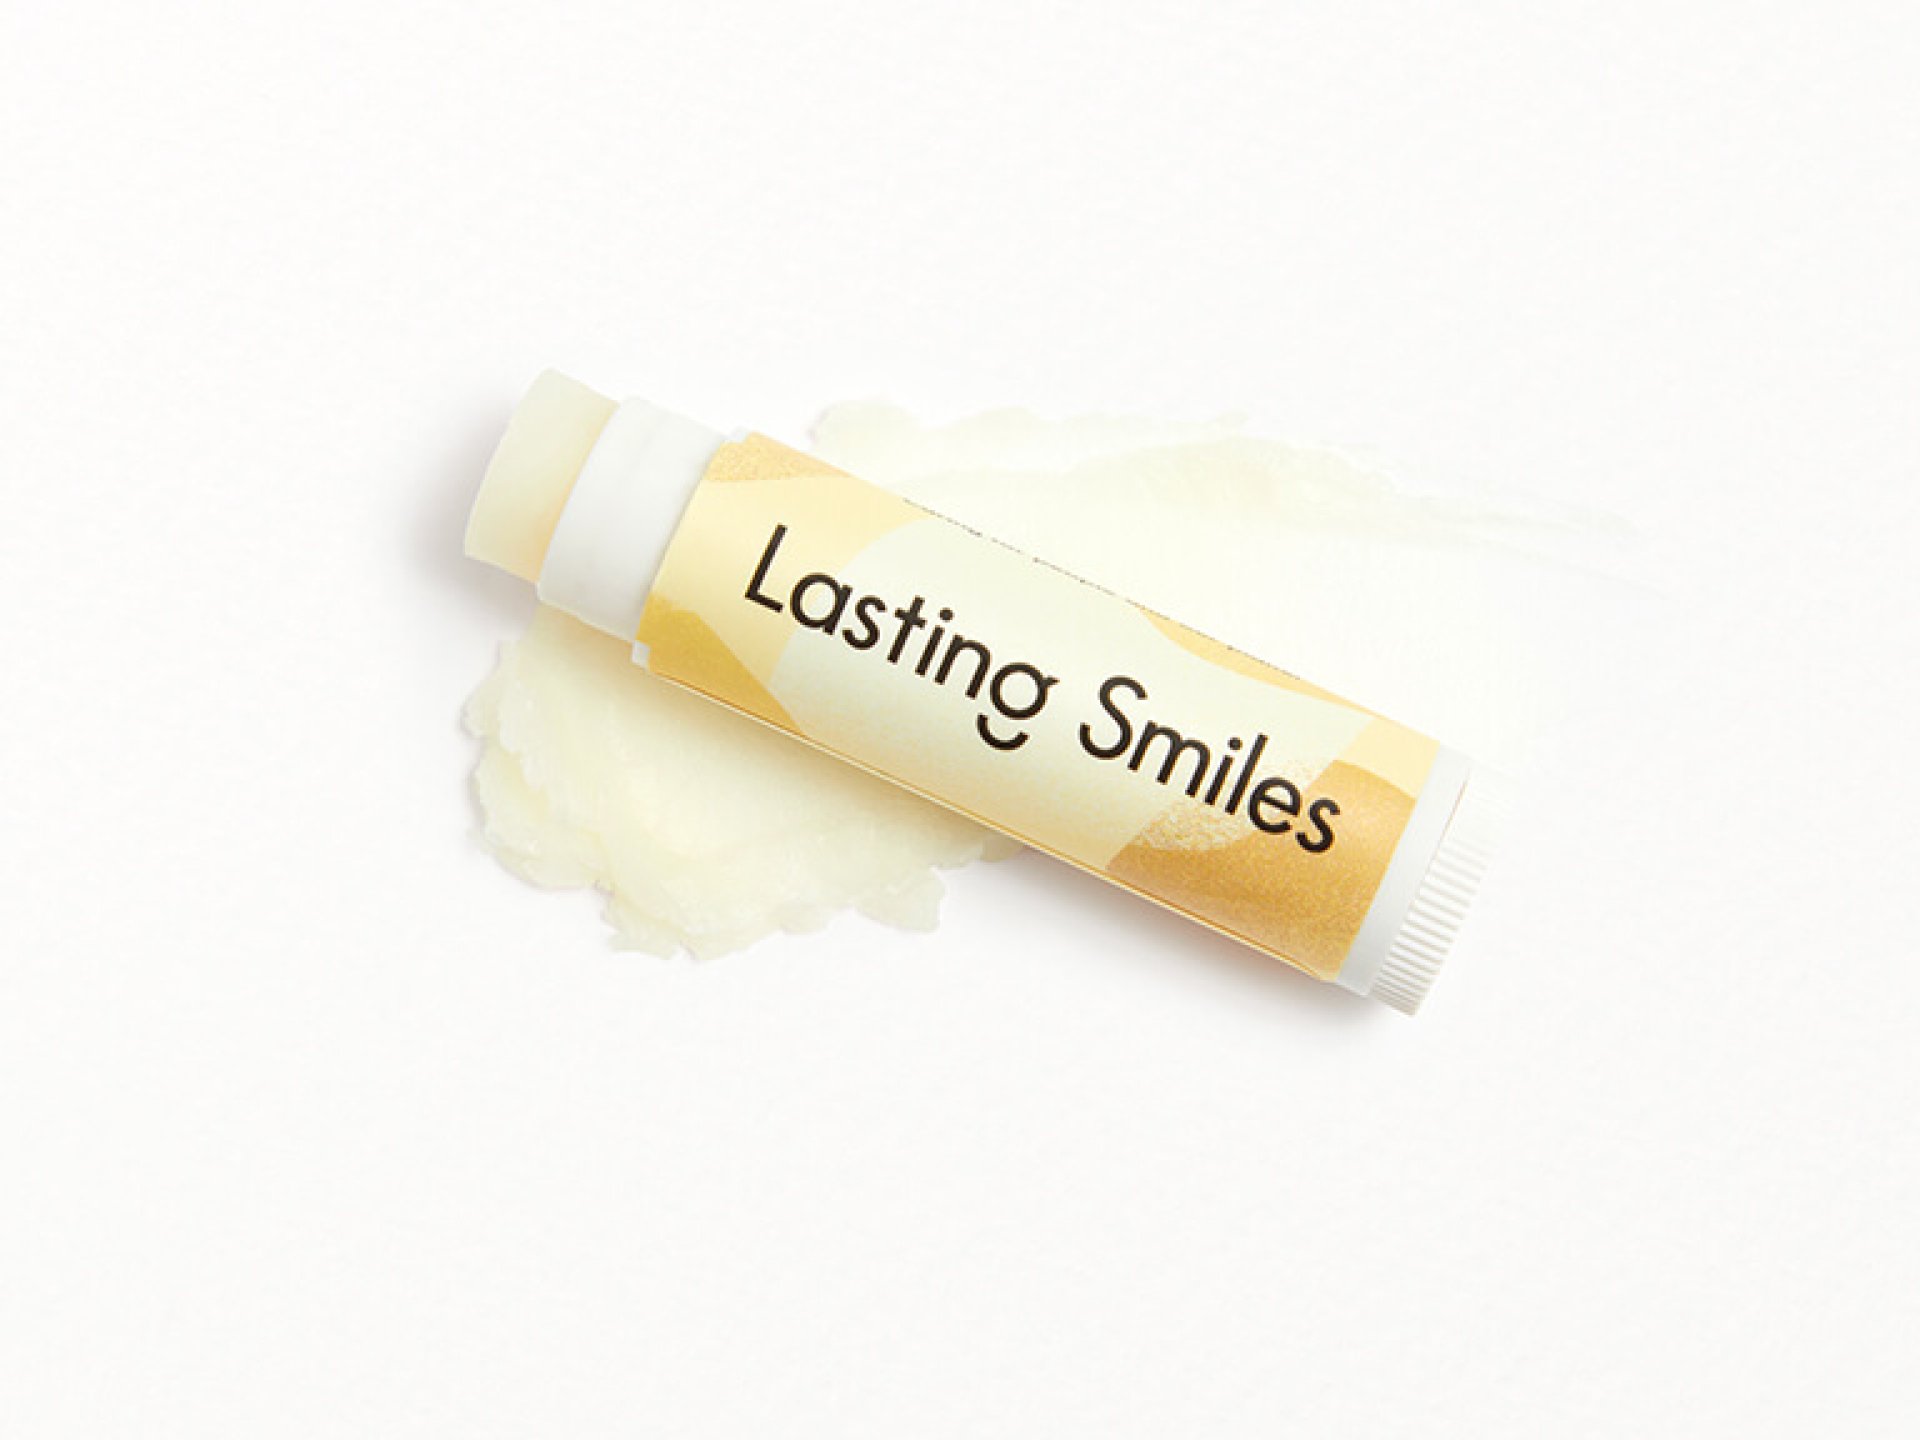 LASTING SMILES Lip Balm in Vanilla